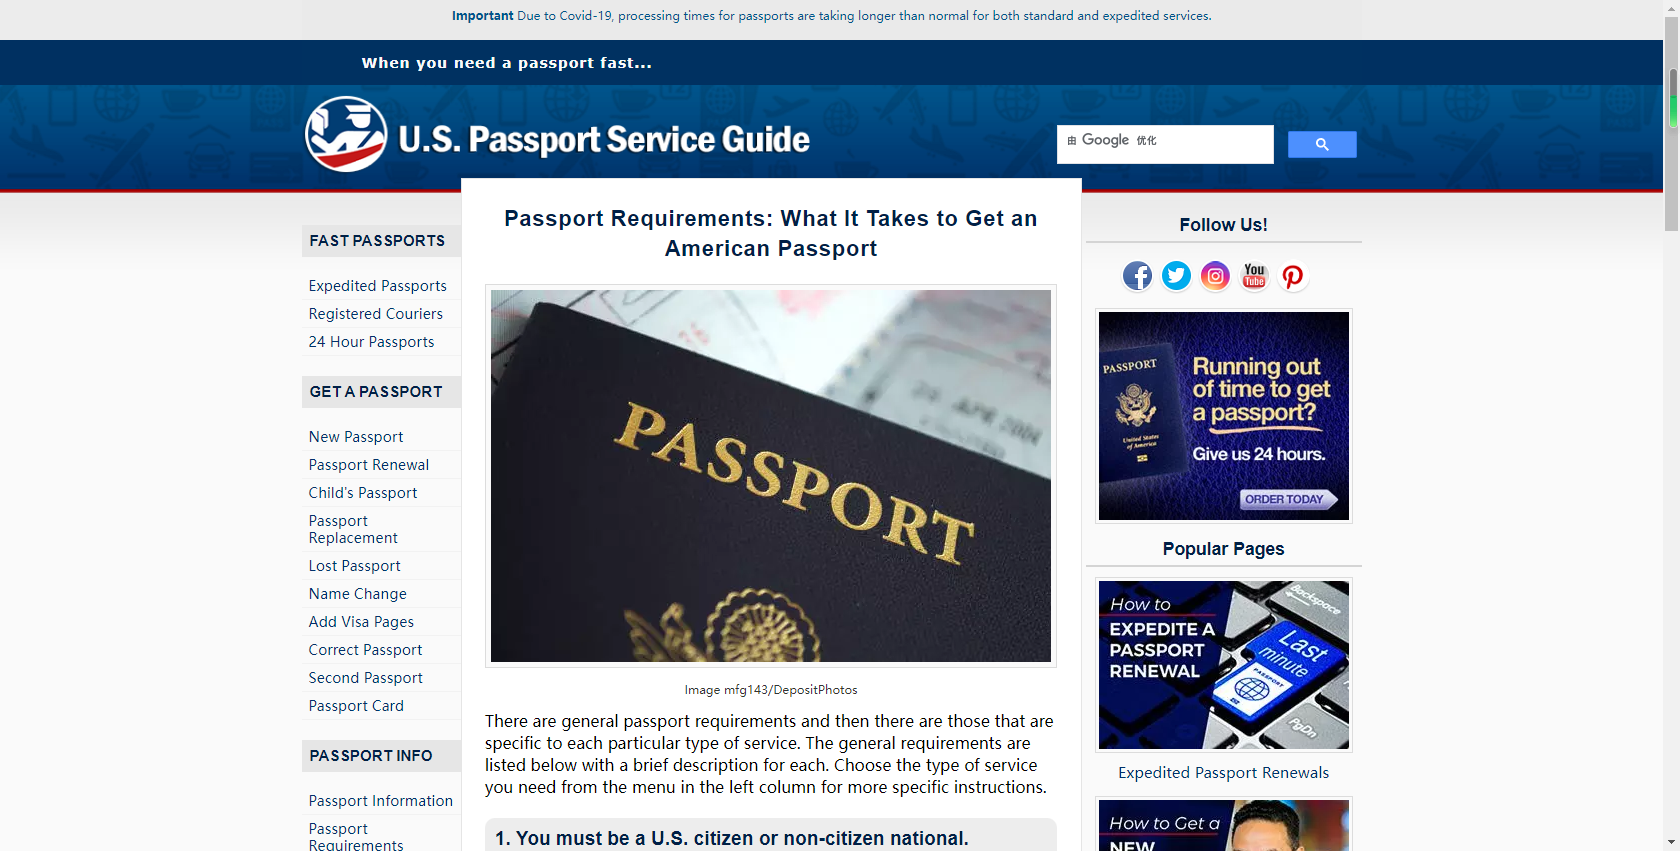 U.S. passport service guide